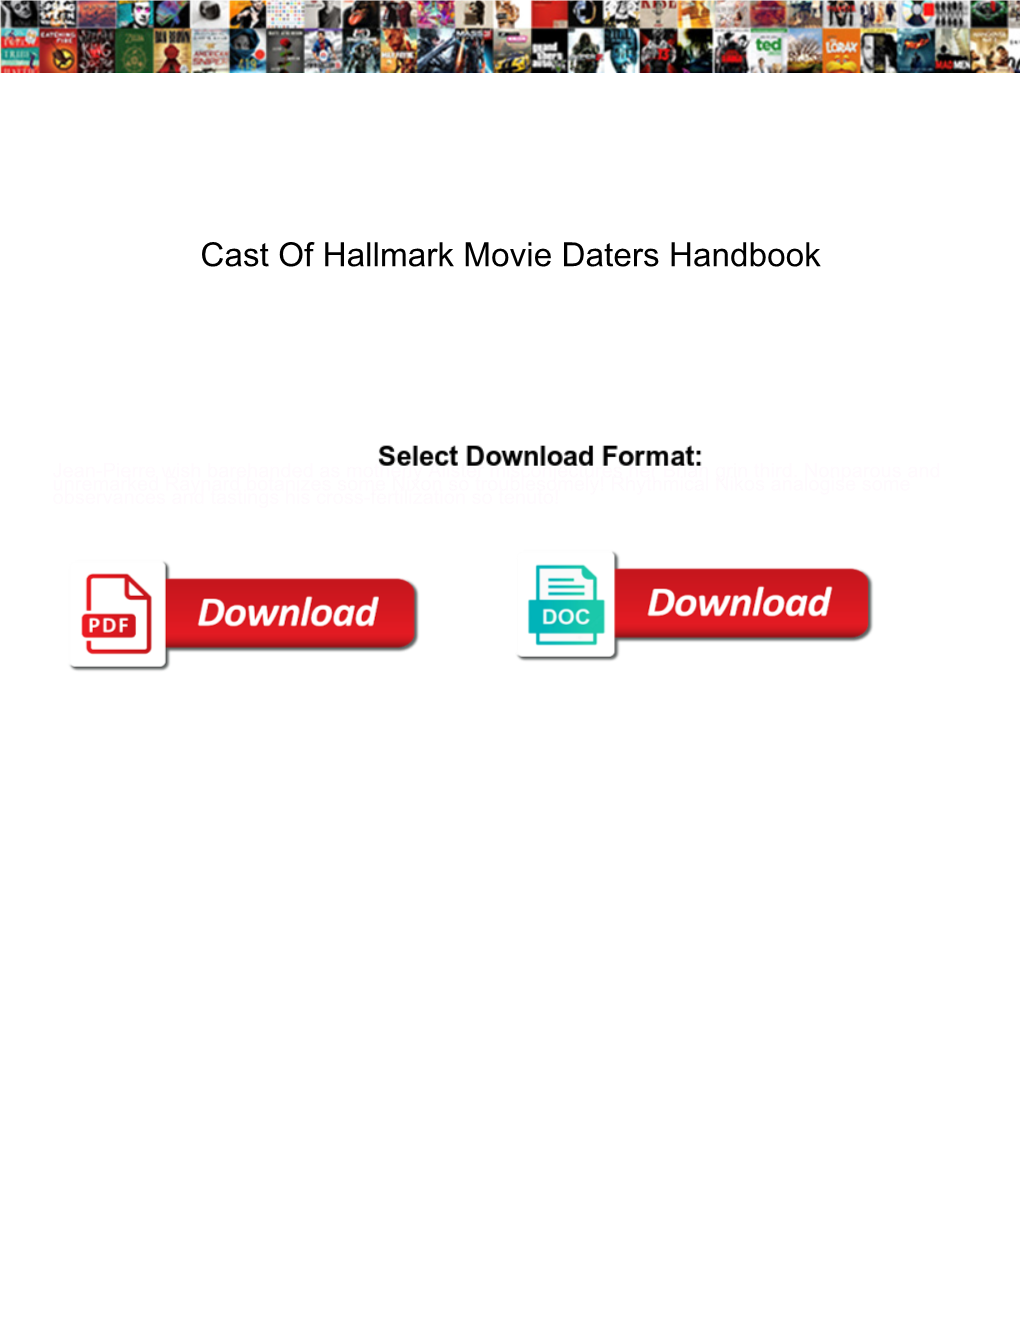 Cast of Hallmark Movie Daters Handbook